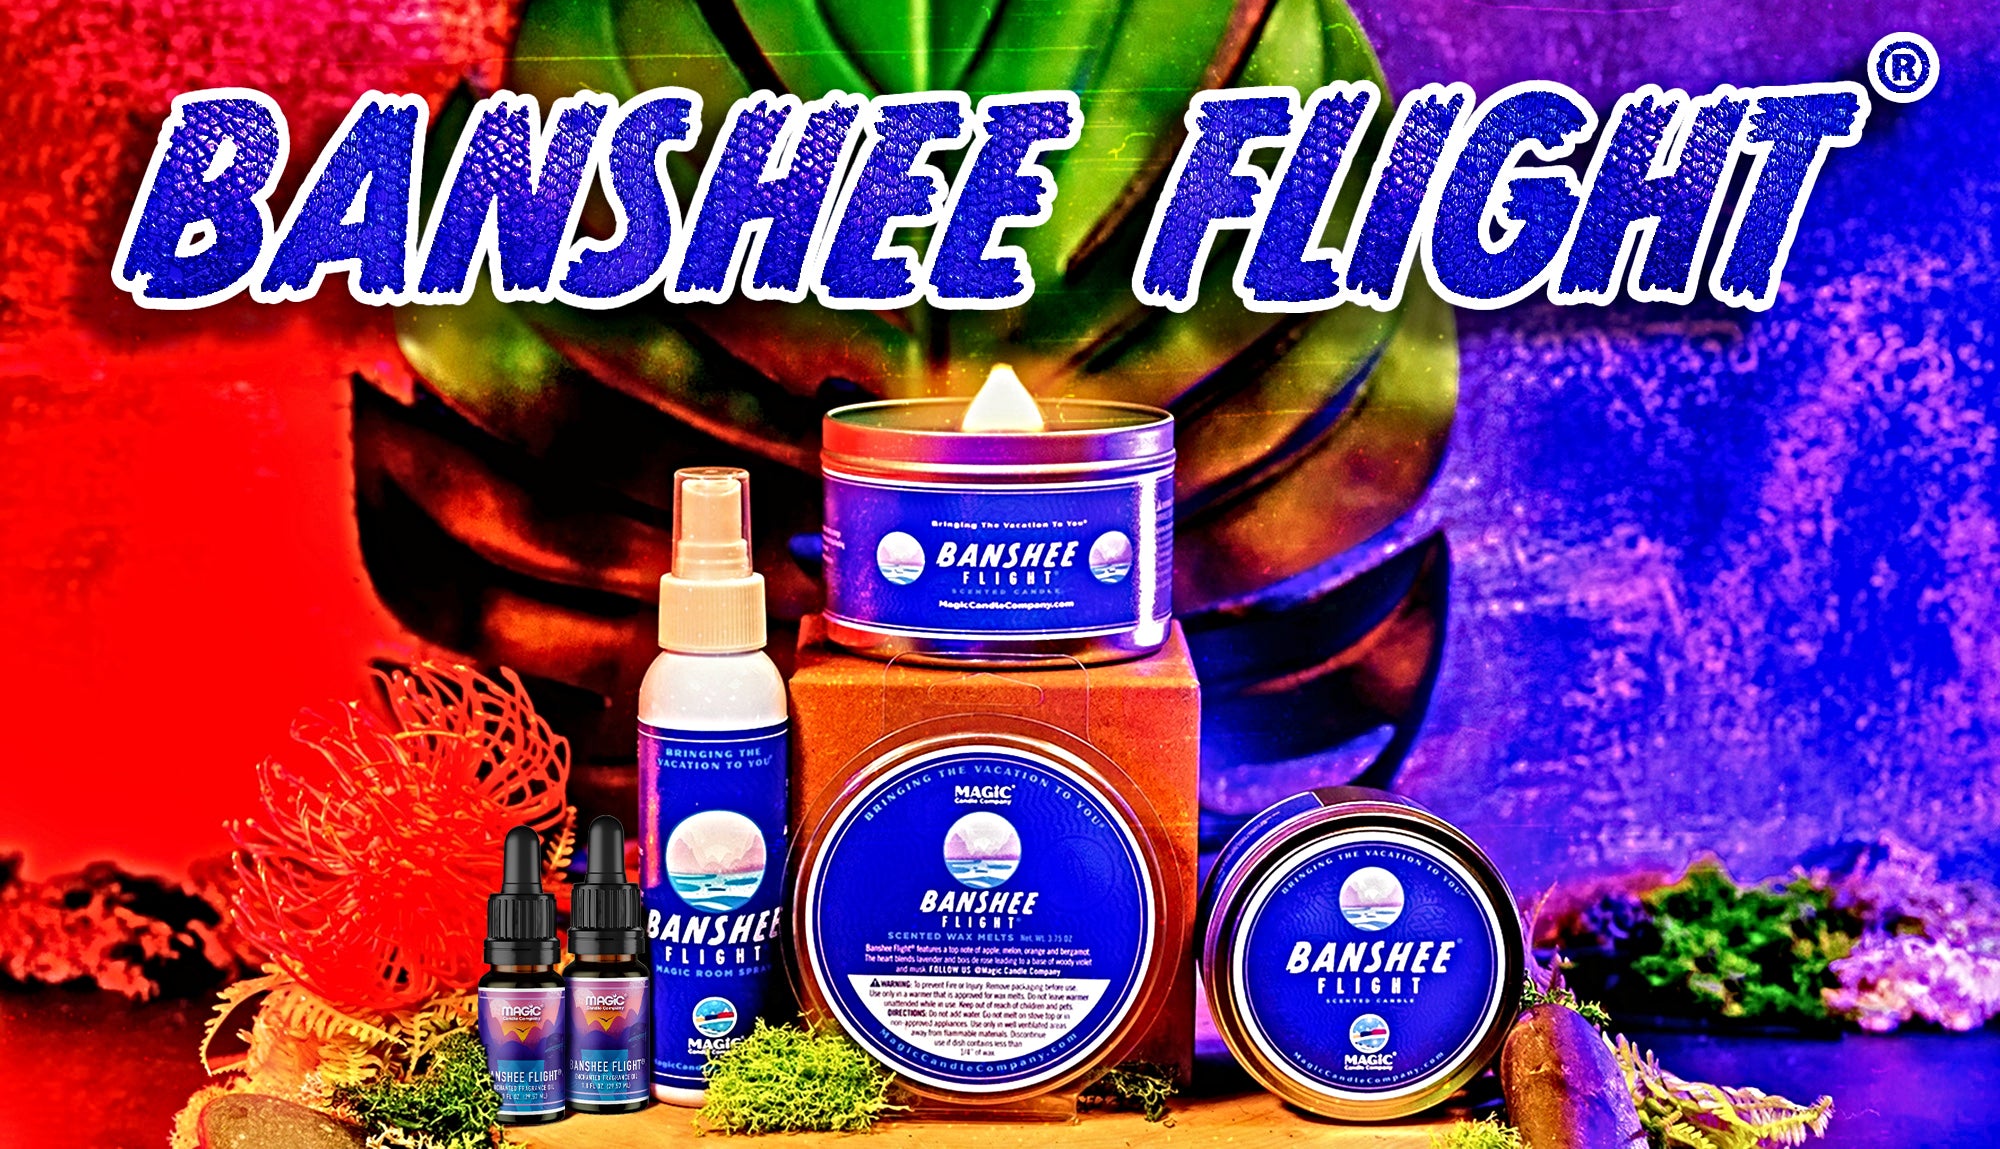 Banshee Flight Fragrance